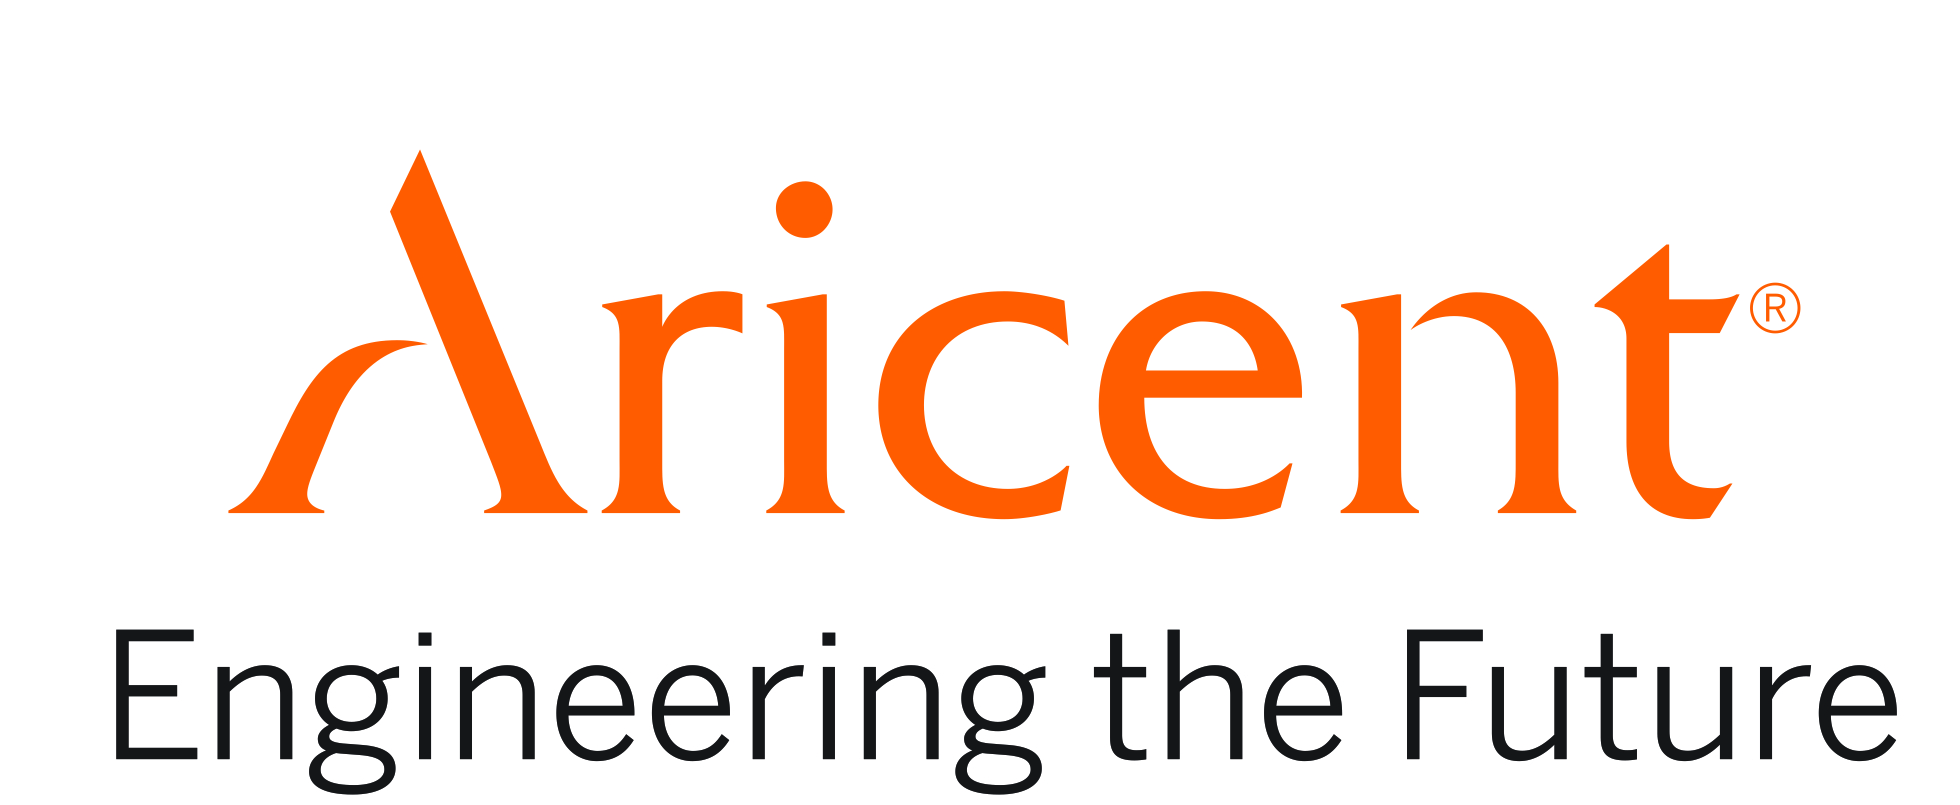 Aricent-logo